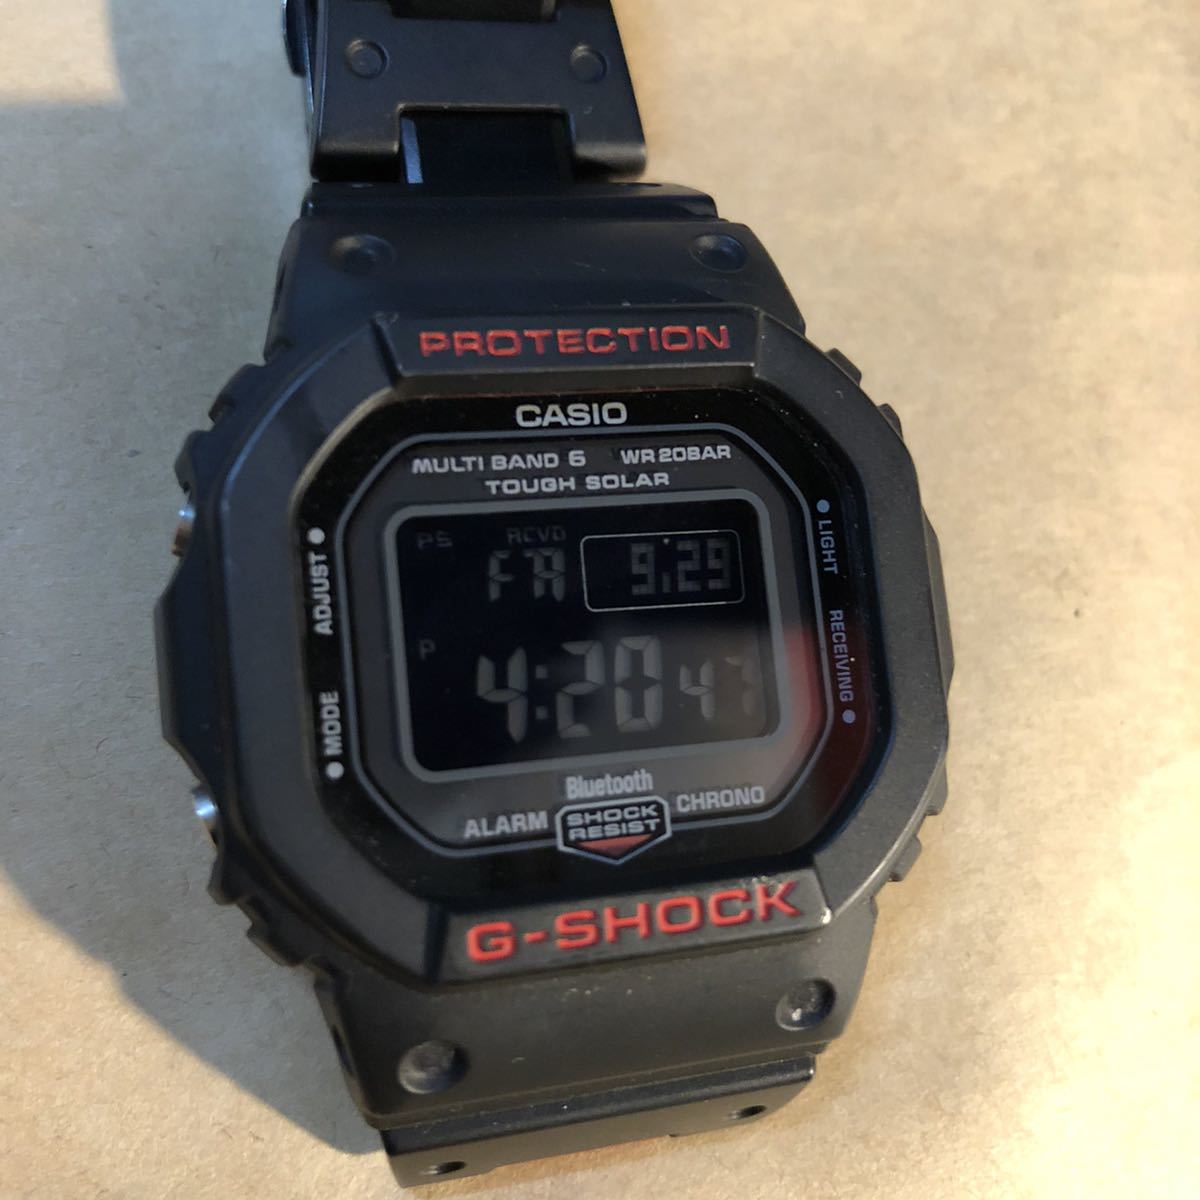 G-SHOCK CASIO カシオ Gショック タフソーラー Bluetooth WA208AR 腕時計 クロック 太陽電池 電波時計 ブラック レッド 防水_画像5